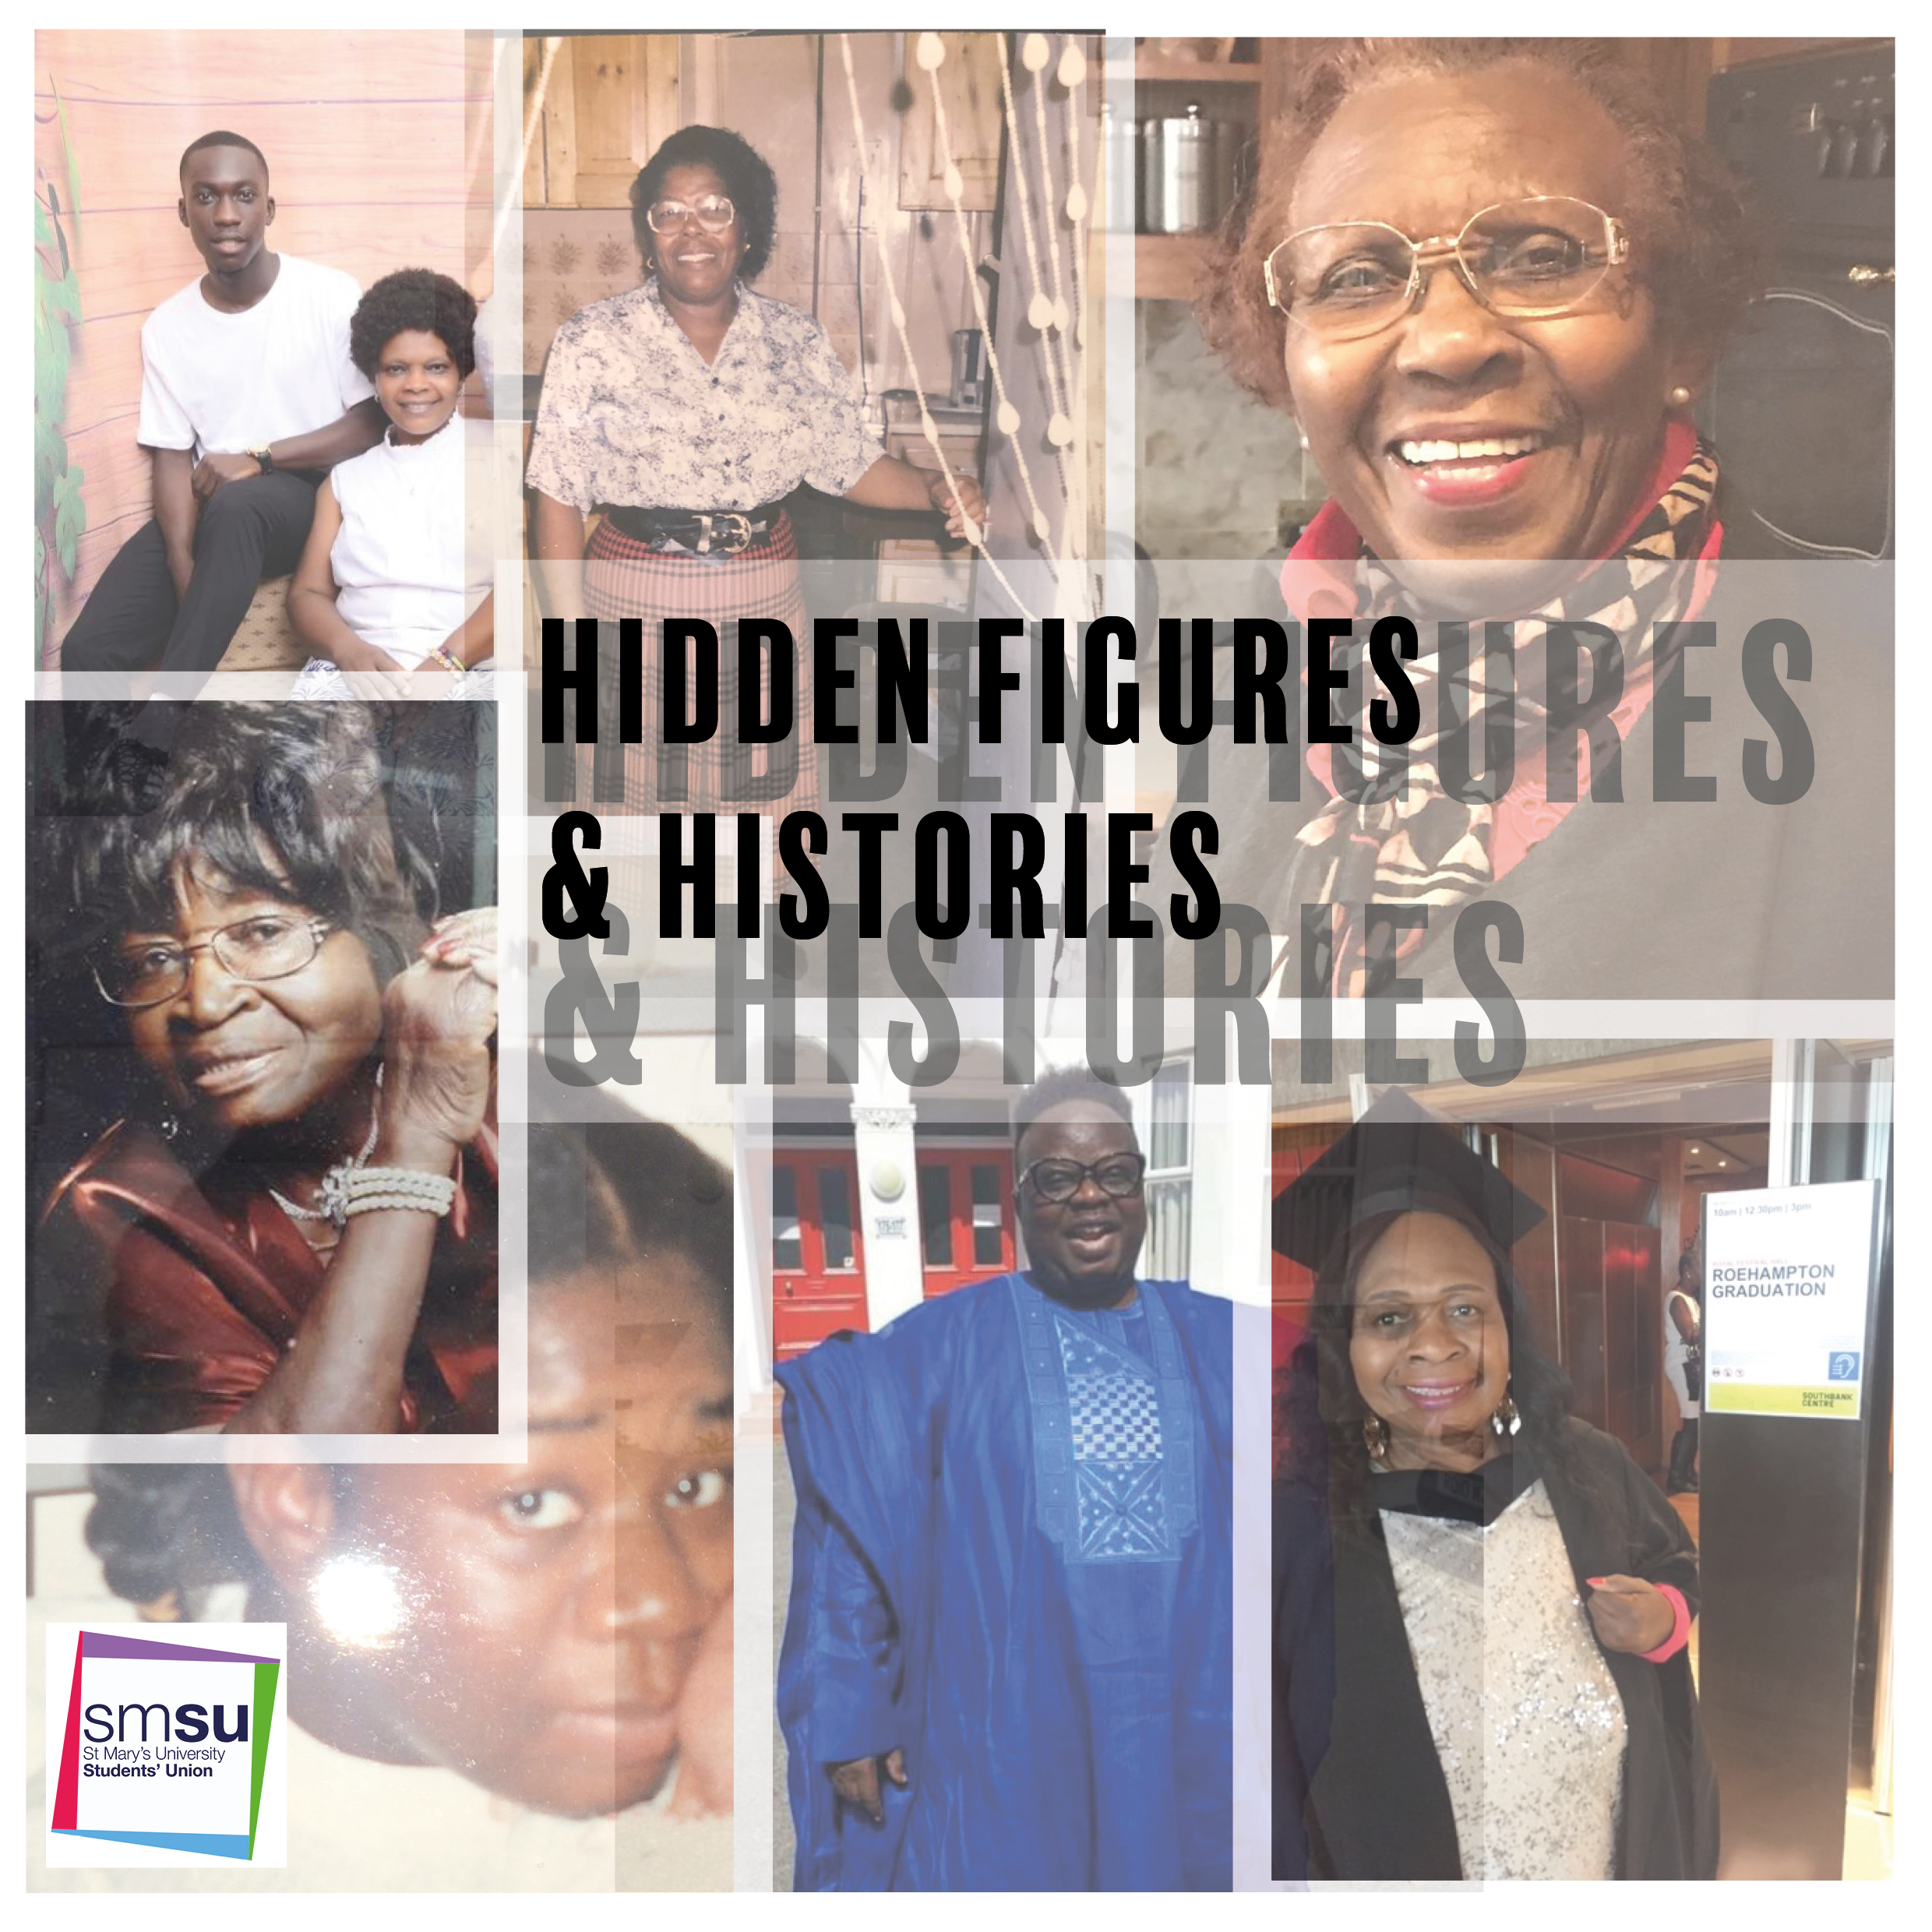 Hidden figures and histories collage of contributors